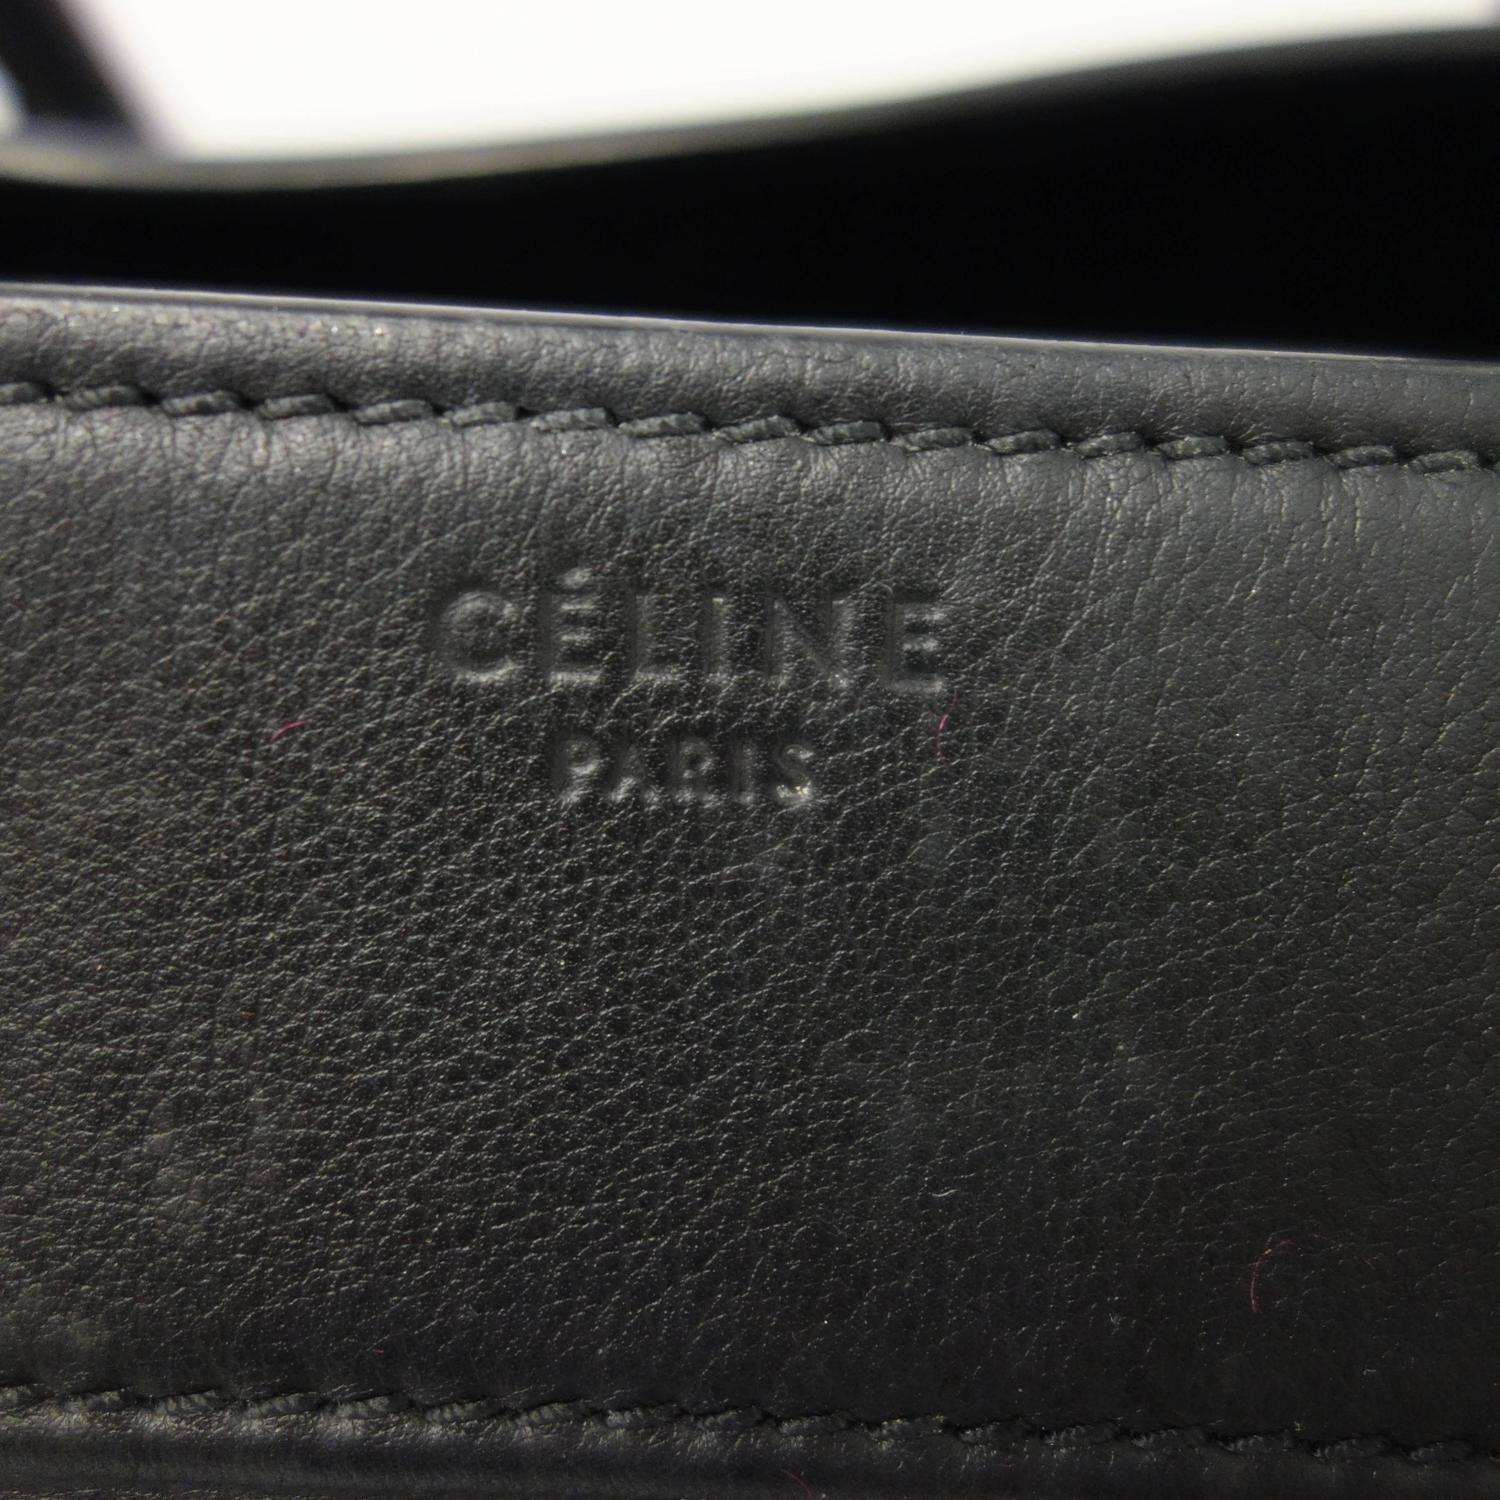 Celine Phantom Black Smooth Leather Luggage Large For Sale at 1stdibs